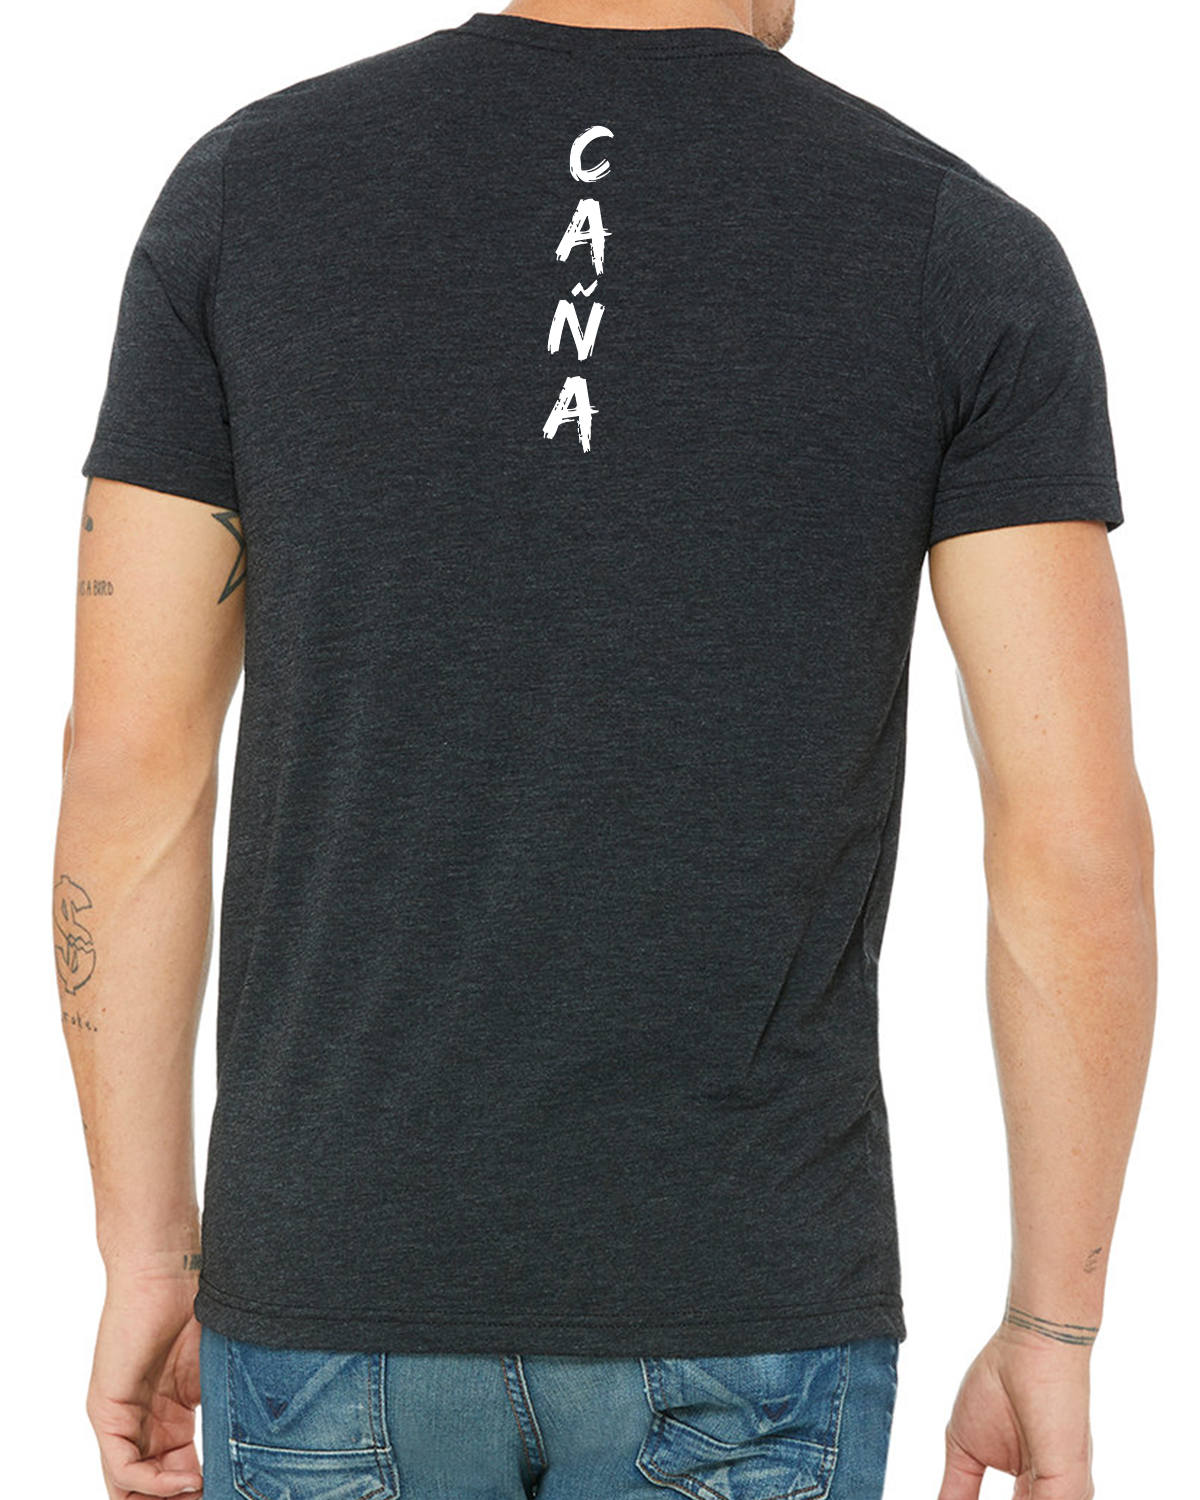 Preformance Polyester Fishing Gear Lightweight Men's CAÑA® Black Heather T-Shirt